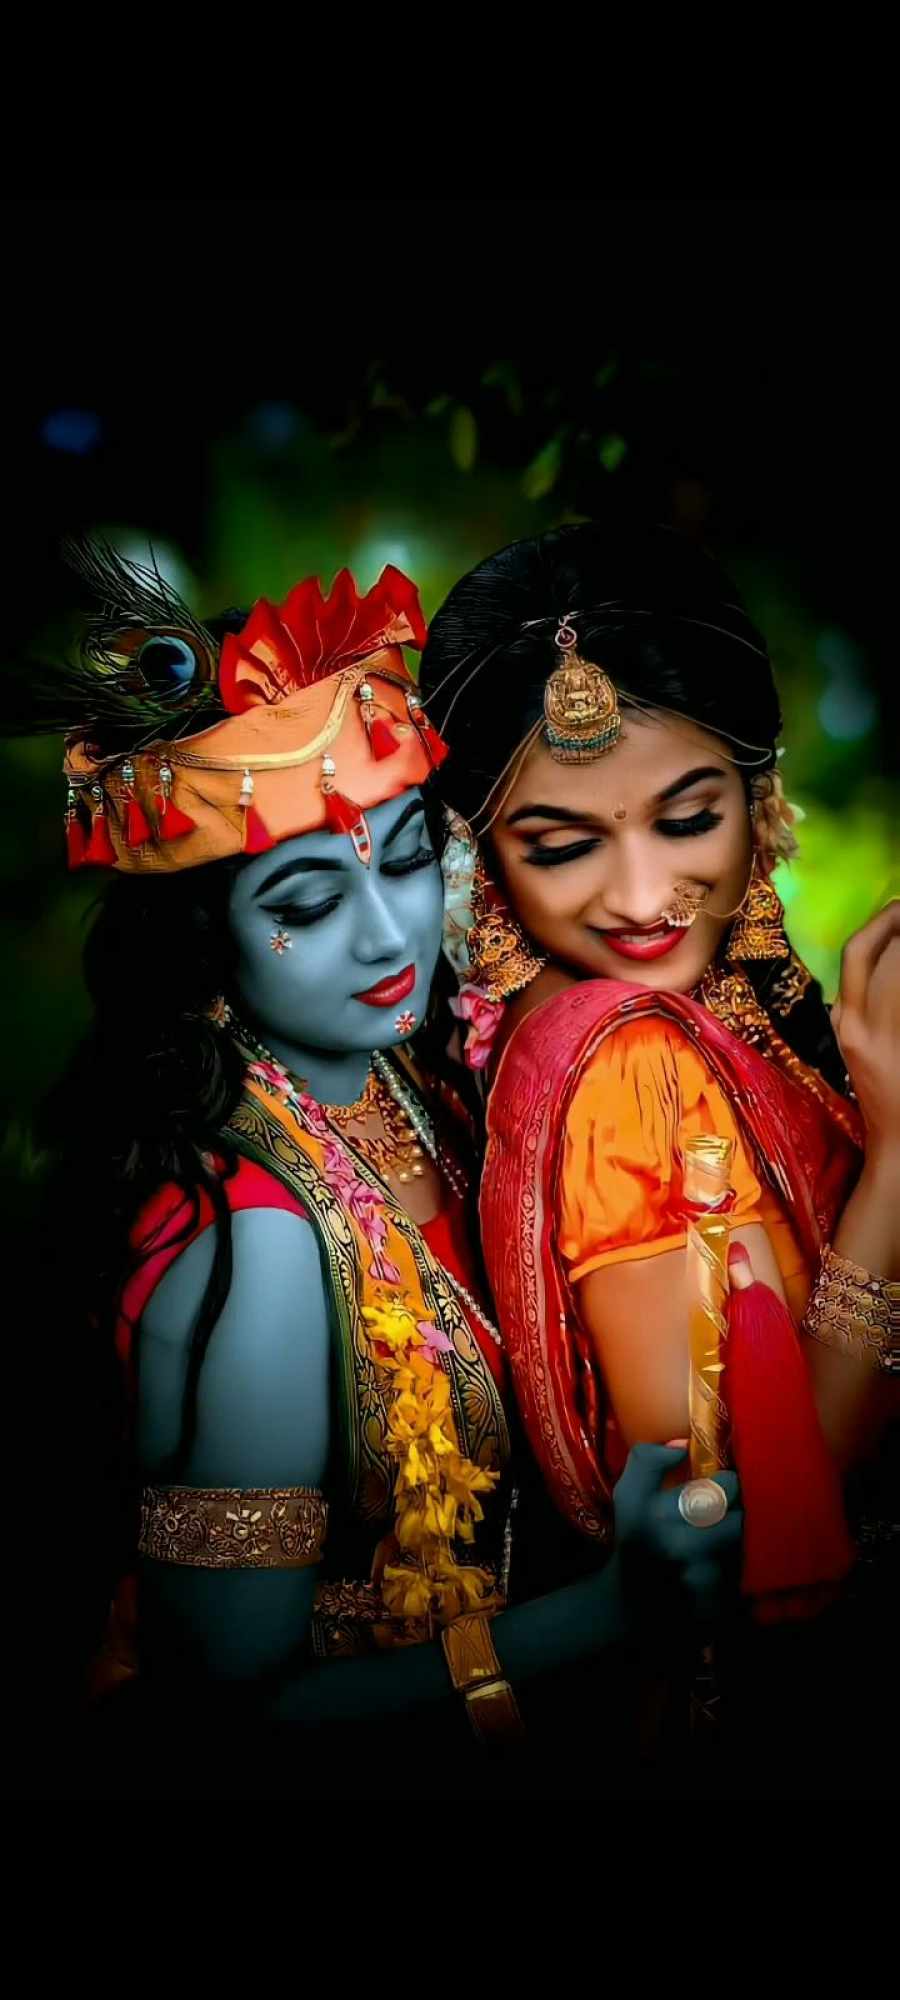 Radha Krishna HD IPhone Wallpaper Wallpaper, iPhone Wallpaper. Army girlfriend picture, Cute love couple image, Cute couple image